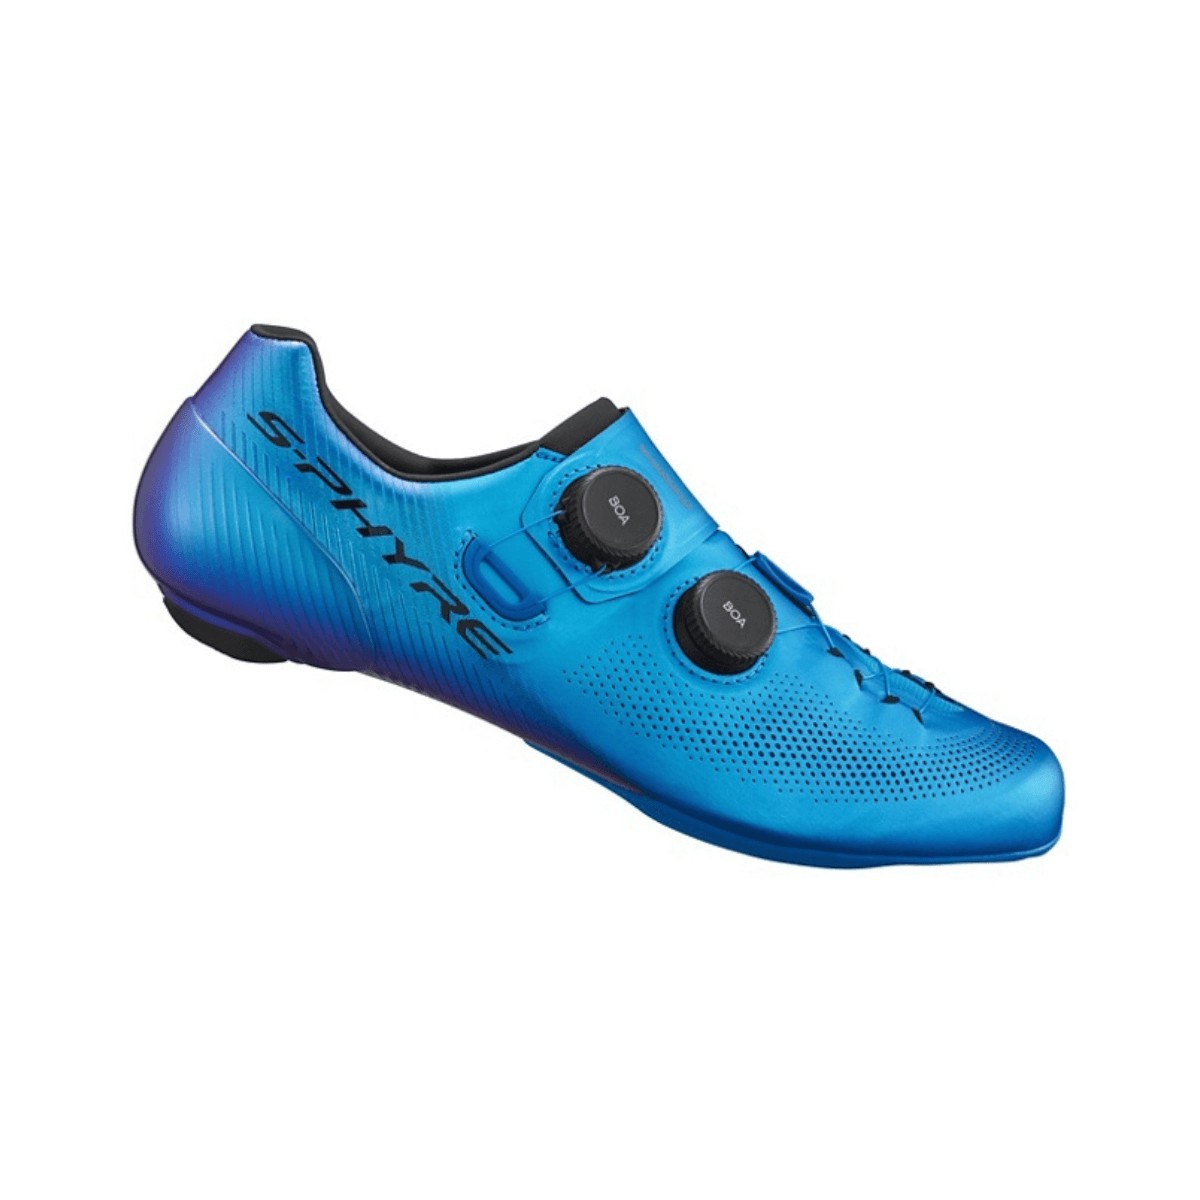 Schuhe Shimano RC903 S-PHYRE blau, Größe 41,5 - EUR